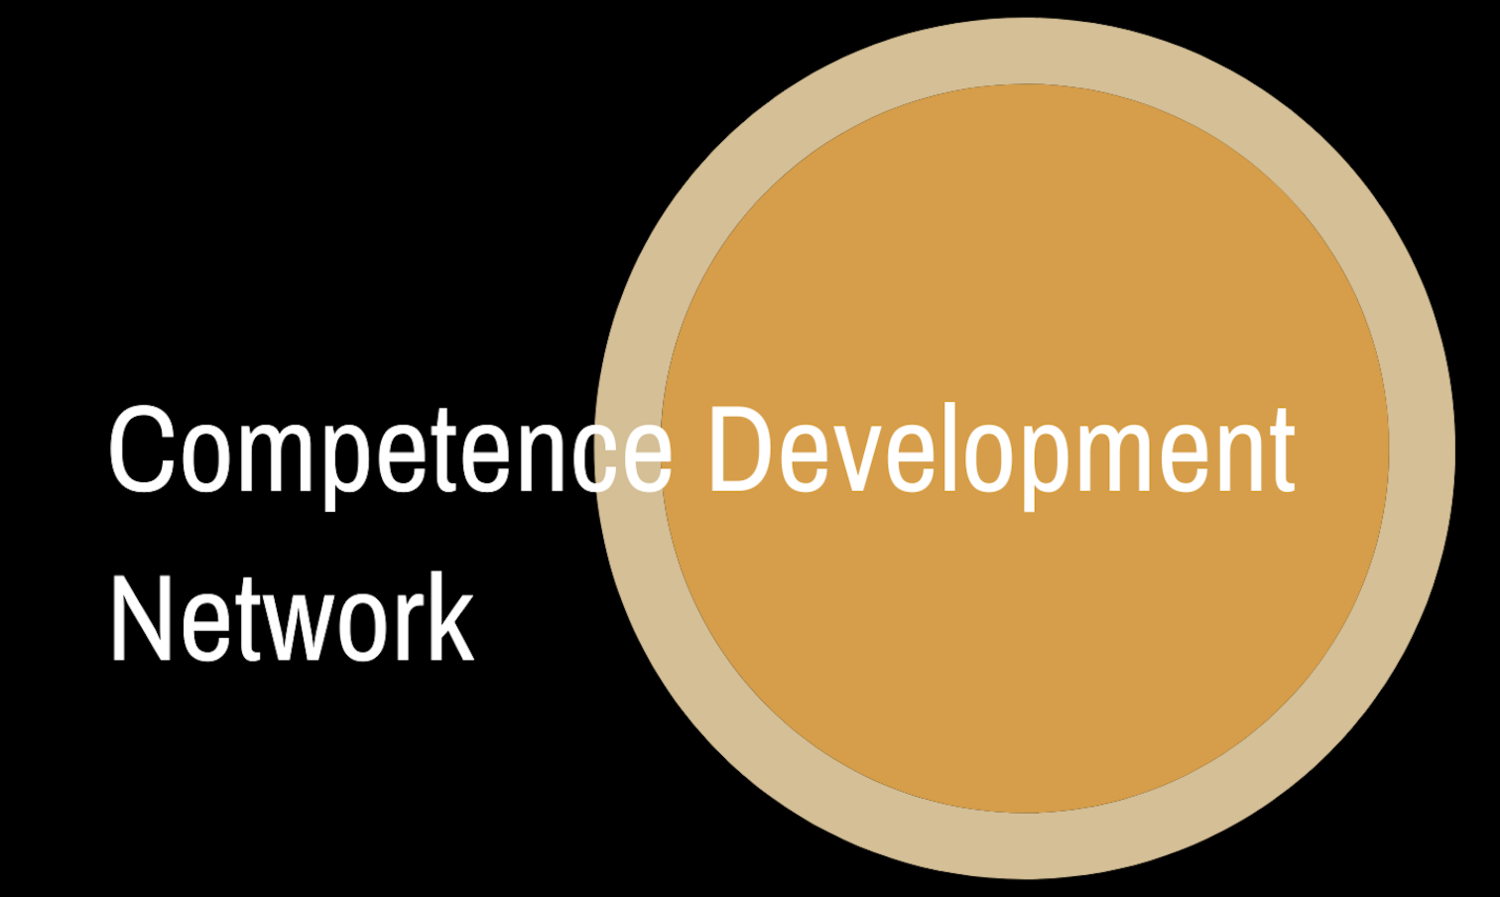 Competence Development Network